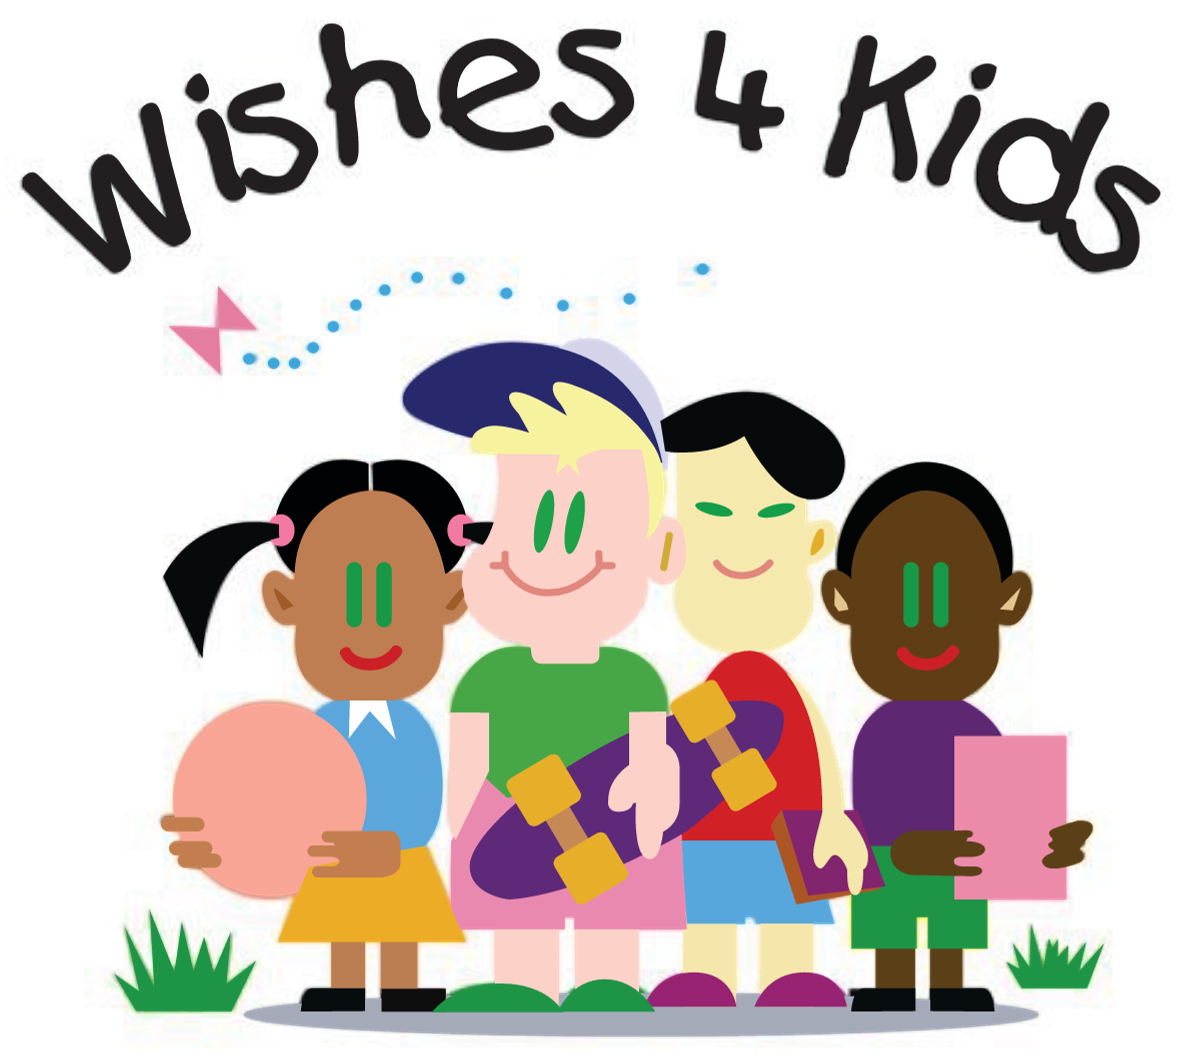 Wishes 4 Kids